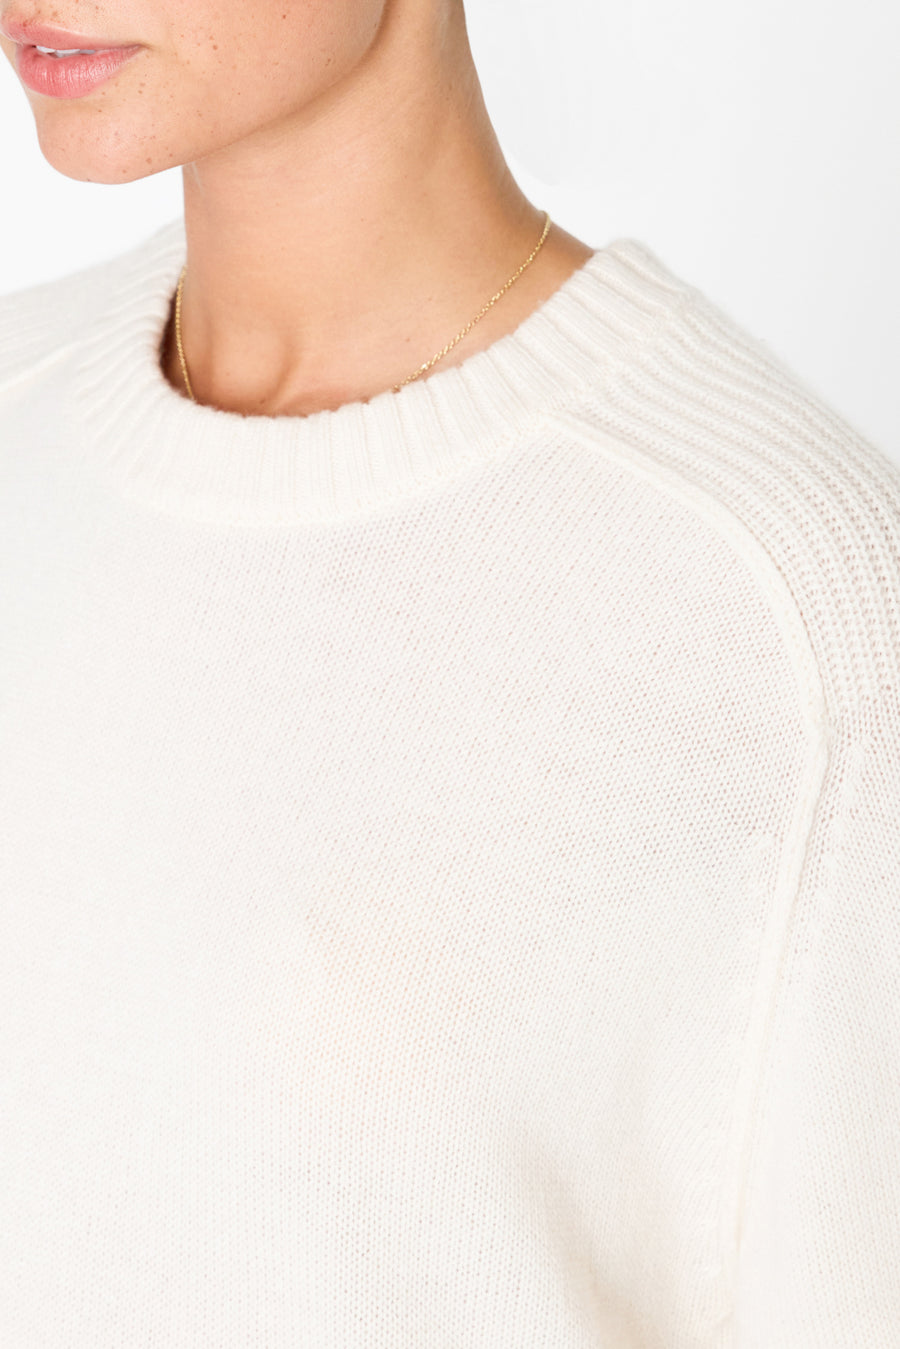 Parson cashmere-wool layered crewneck white sweater close up